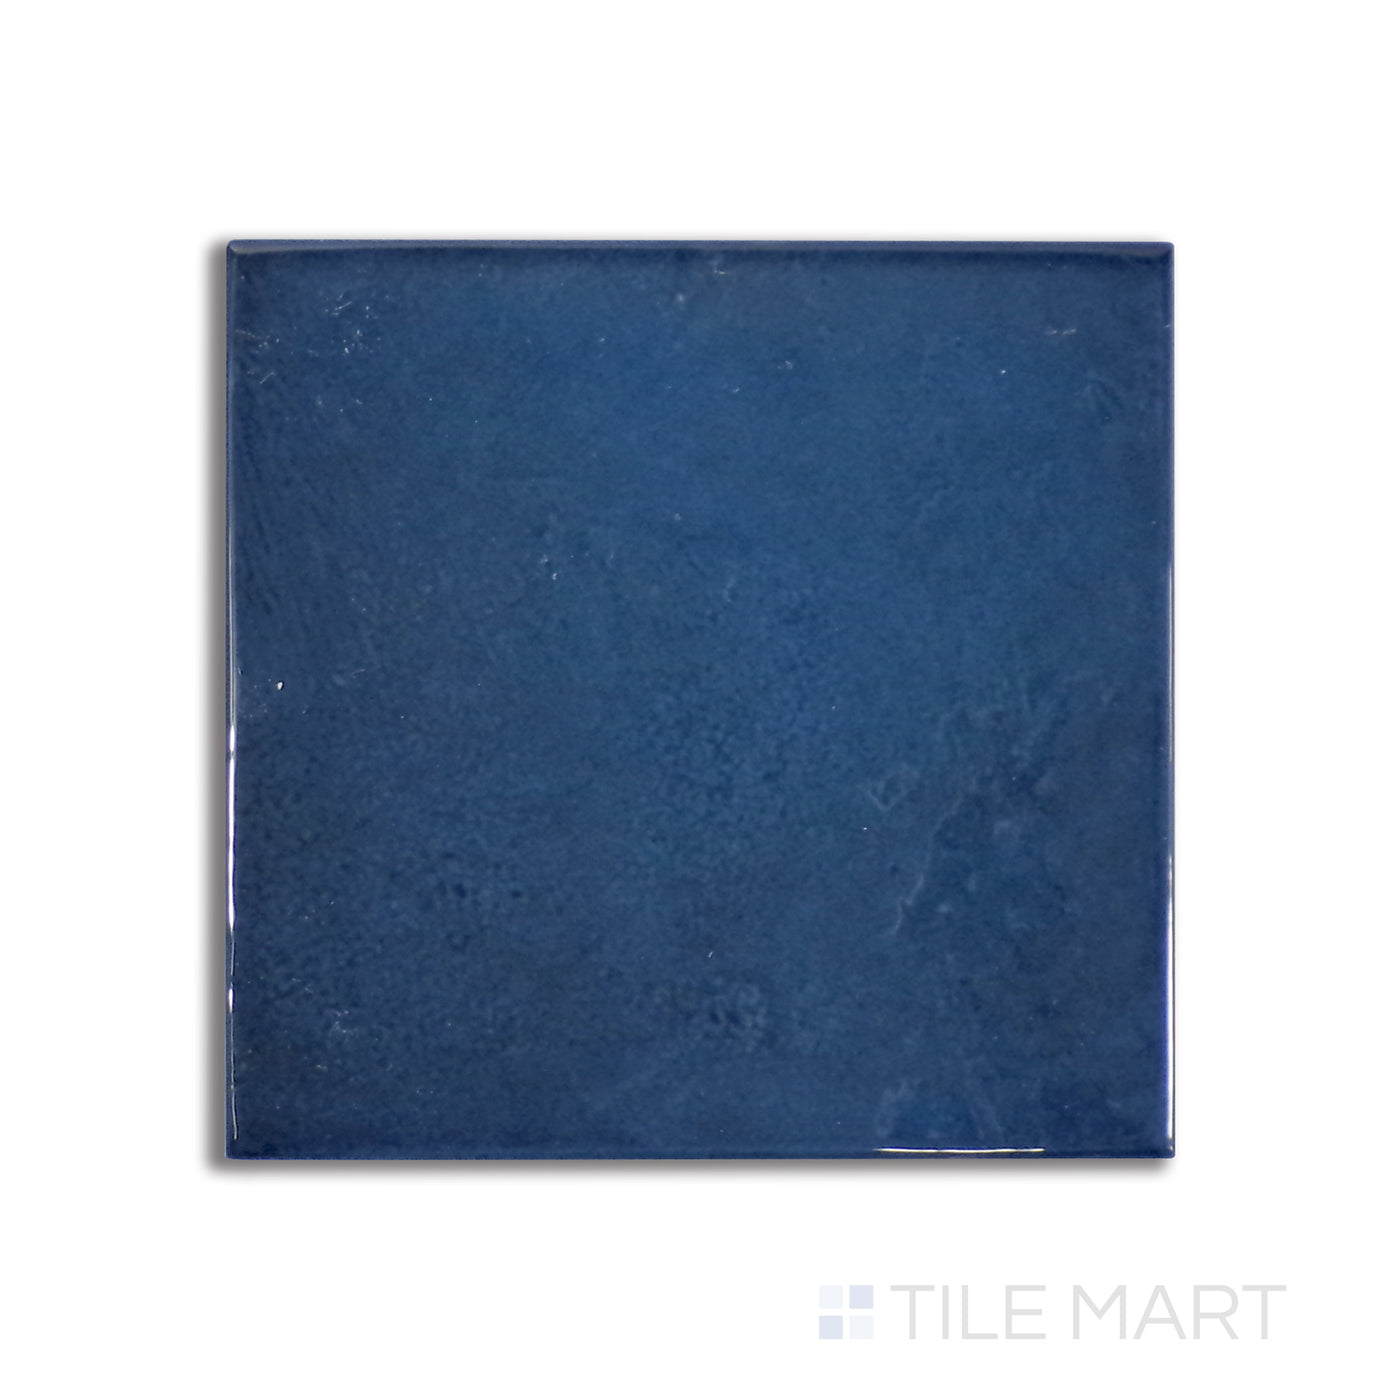 Village Ceramic Field Tile 5X5 Royal Blue Glossy